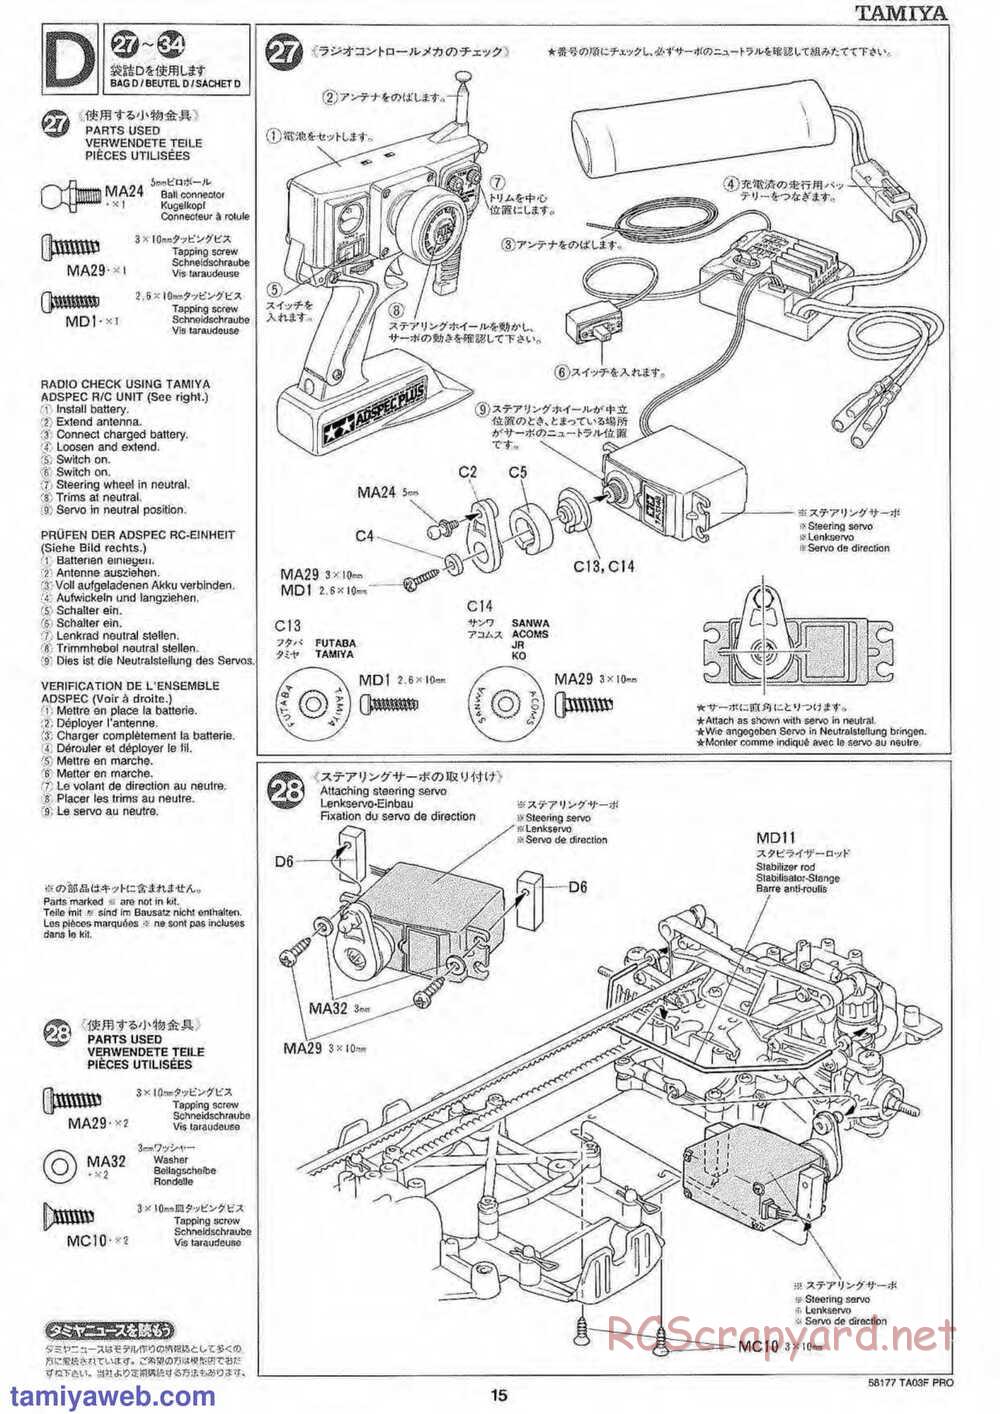 Tamiya - TA-03F Pro Chassis - Manual - Page 15